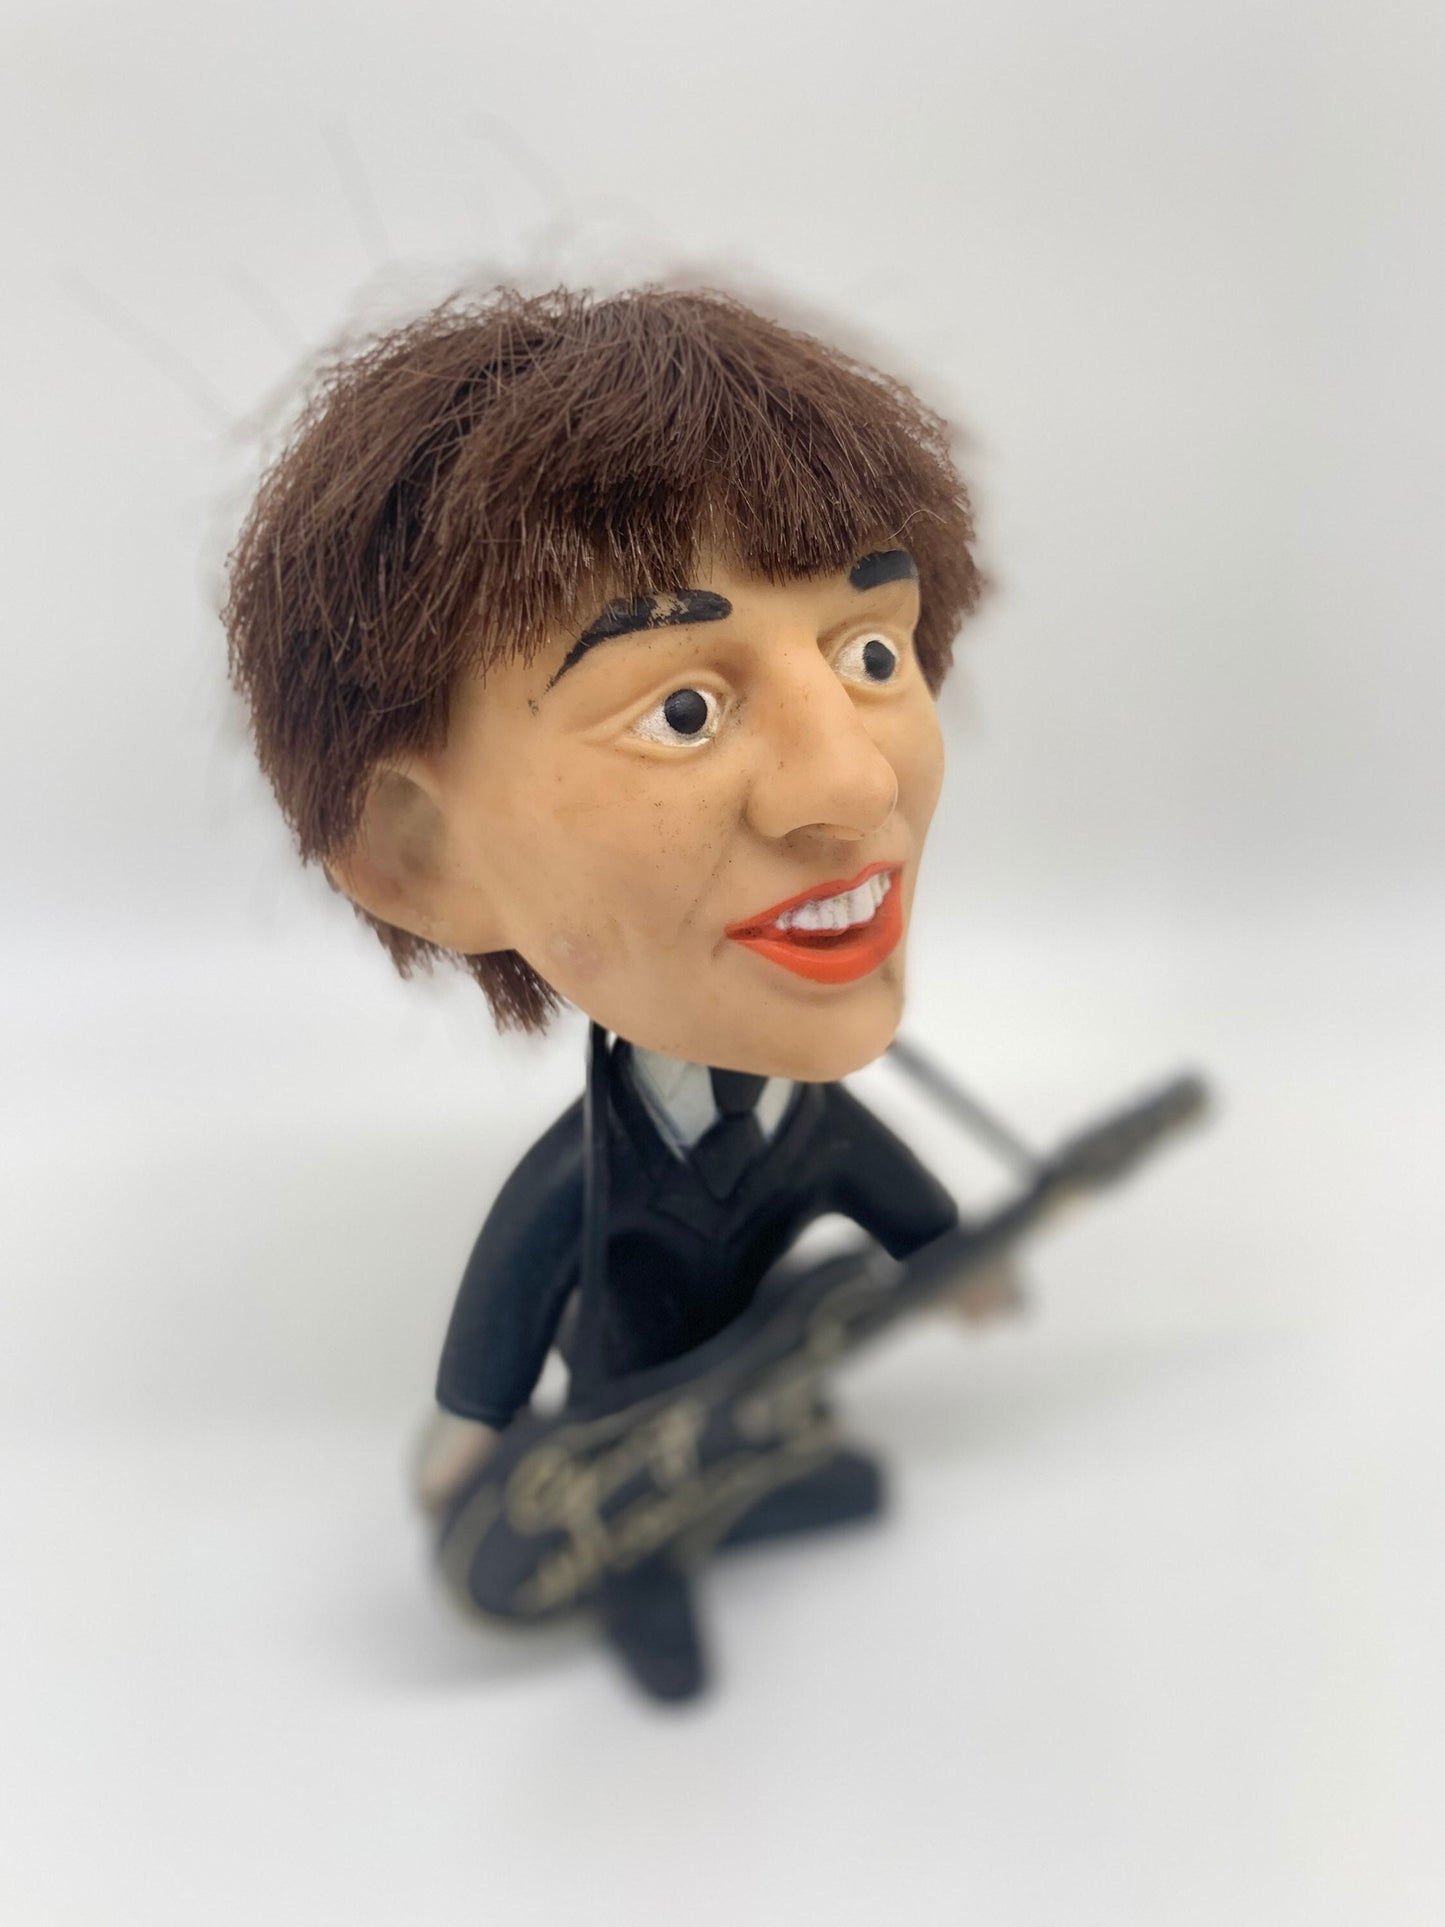 George Harrison The Beatles SELTAEB NEMS Figurine Collectable Vintage Memorabilia Perfect Birthday Gift Beatles Band Merch